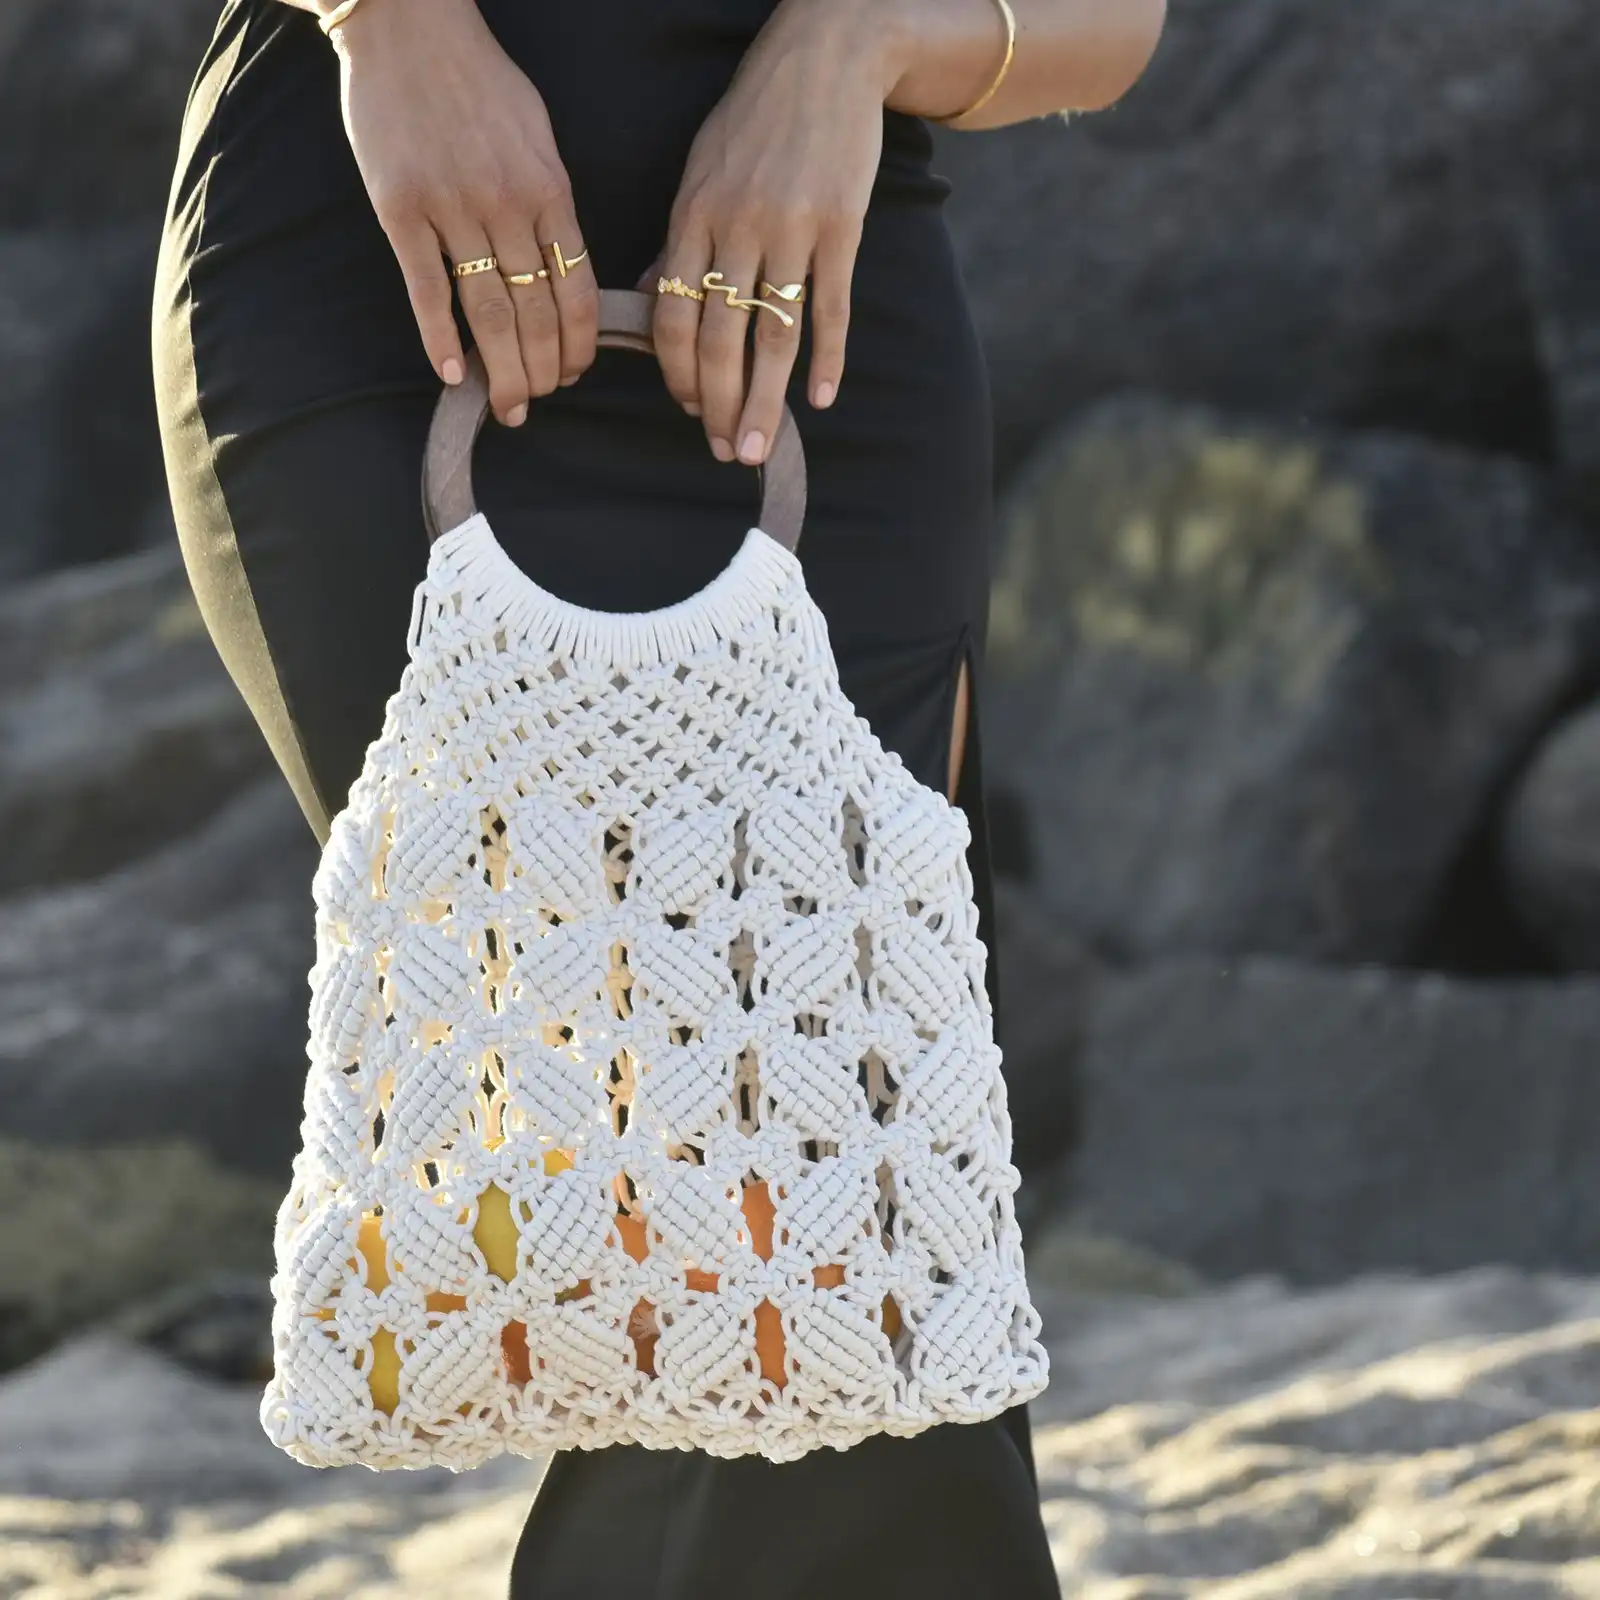 Culturesse Elowen Natural Woven 43.5cm Netting Bag Women's Fashion Handbag White